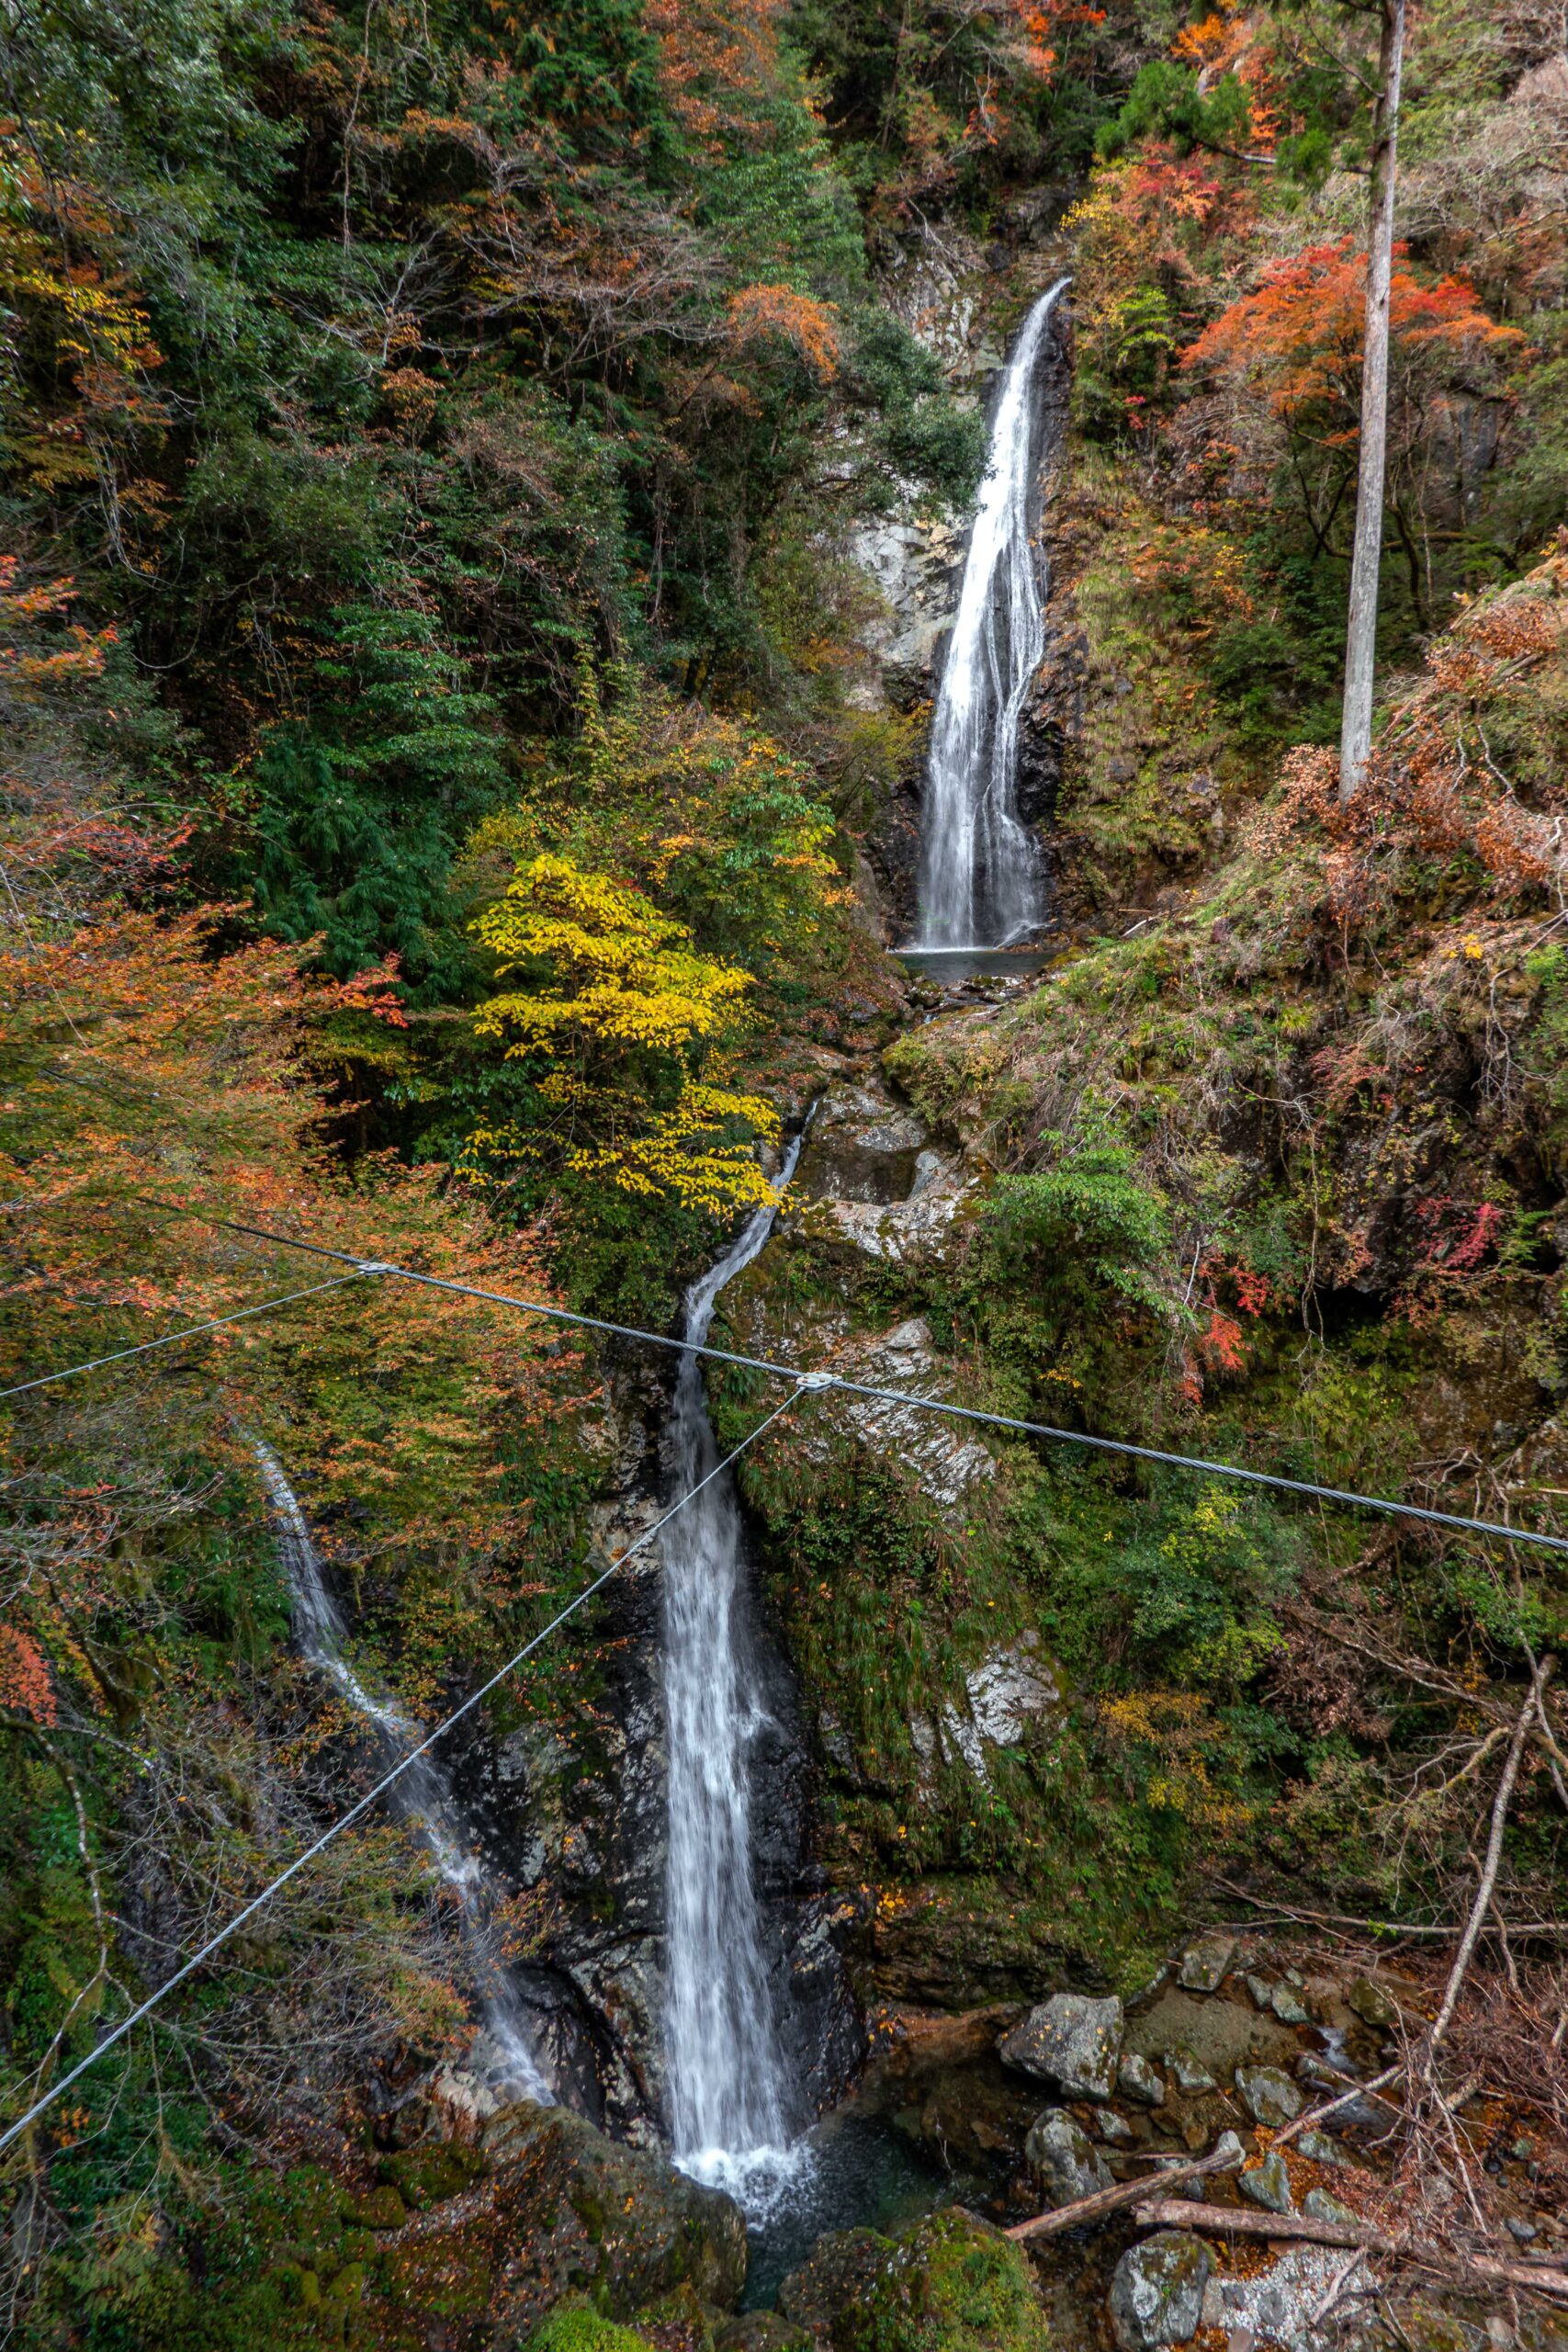 DSC07995-scaled 兵庫県  原不動滝(日本の滝100選に選定された紅葉景色の美しい絶景の滝 ! 撮影した写真の紹介、 アクセス情報など)　